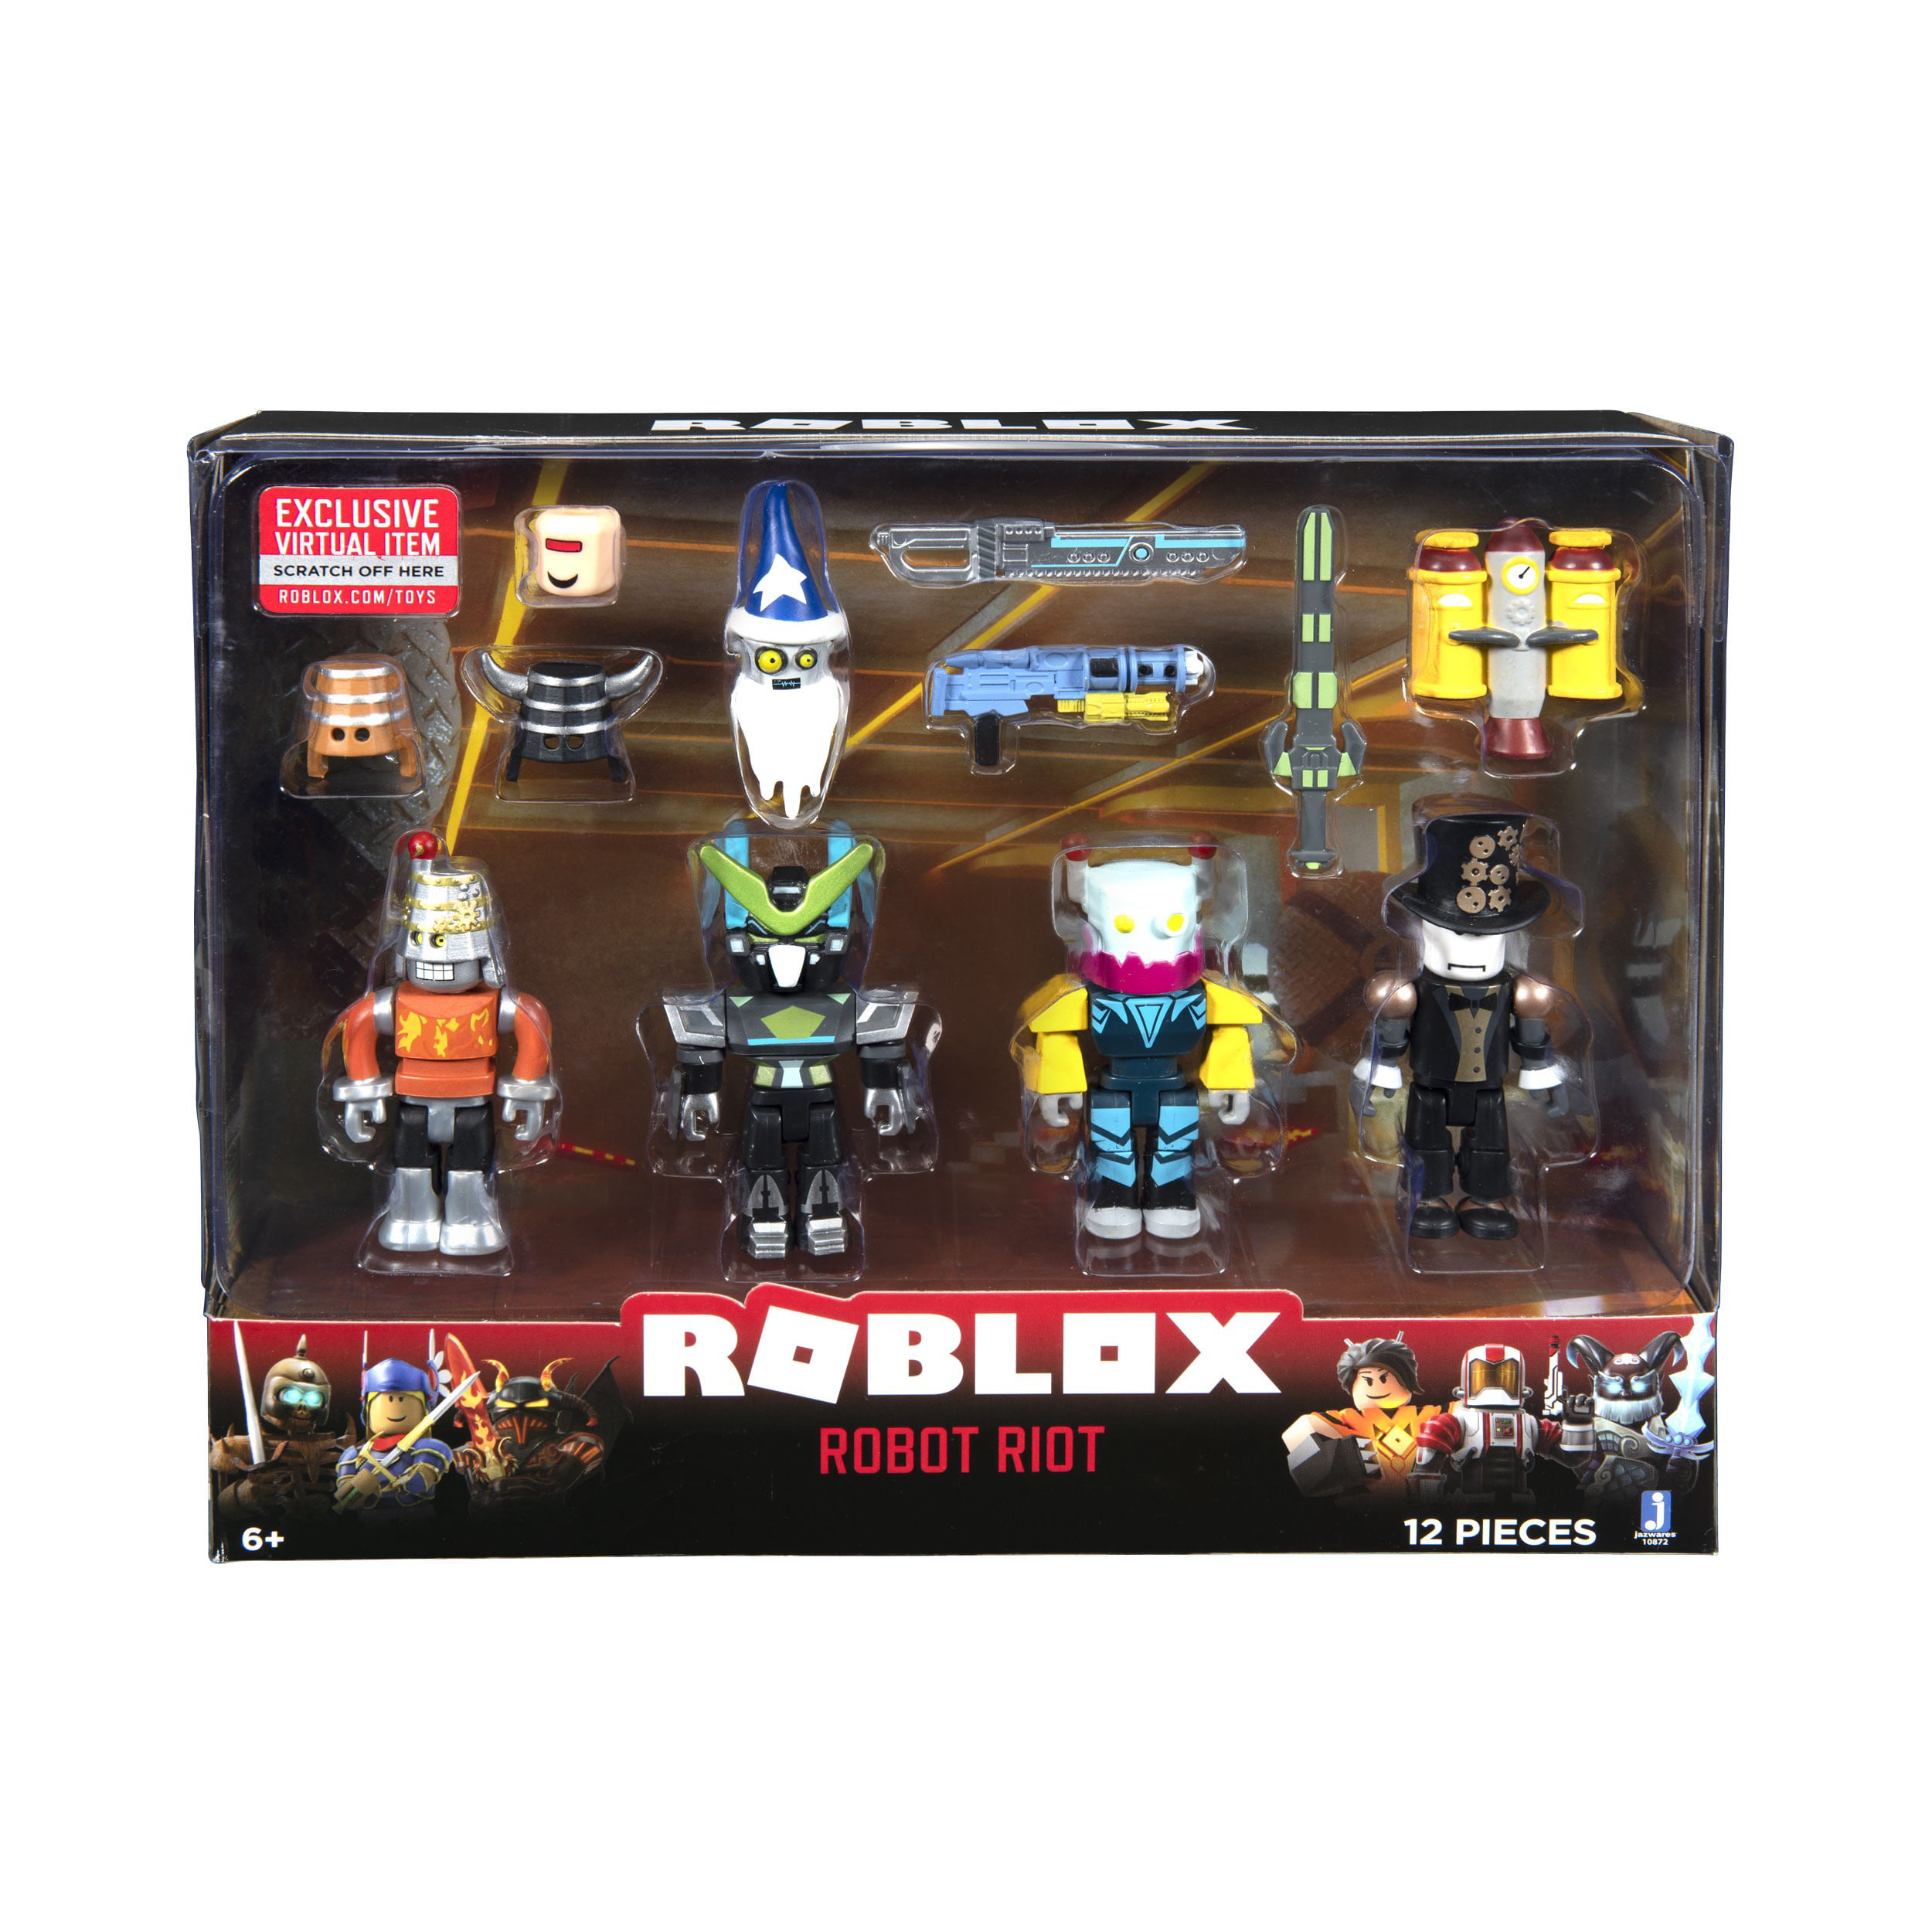 Roblox Robot Riot Mix Match Set Walmart Com Walmart Com - roblox upgrades business certification and it schools in